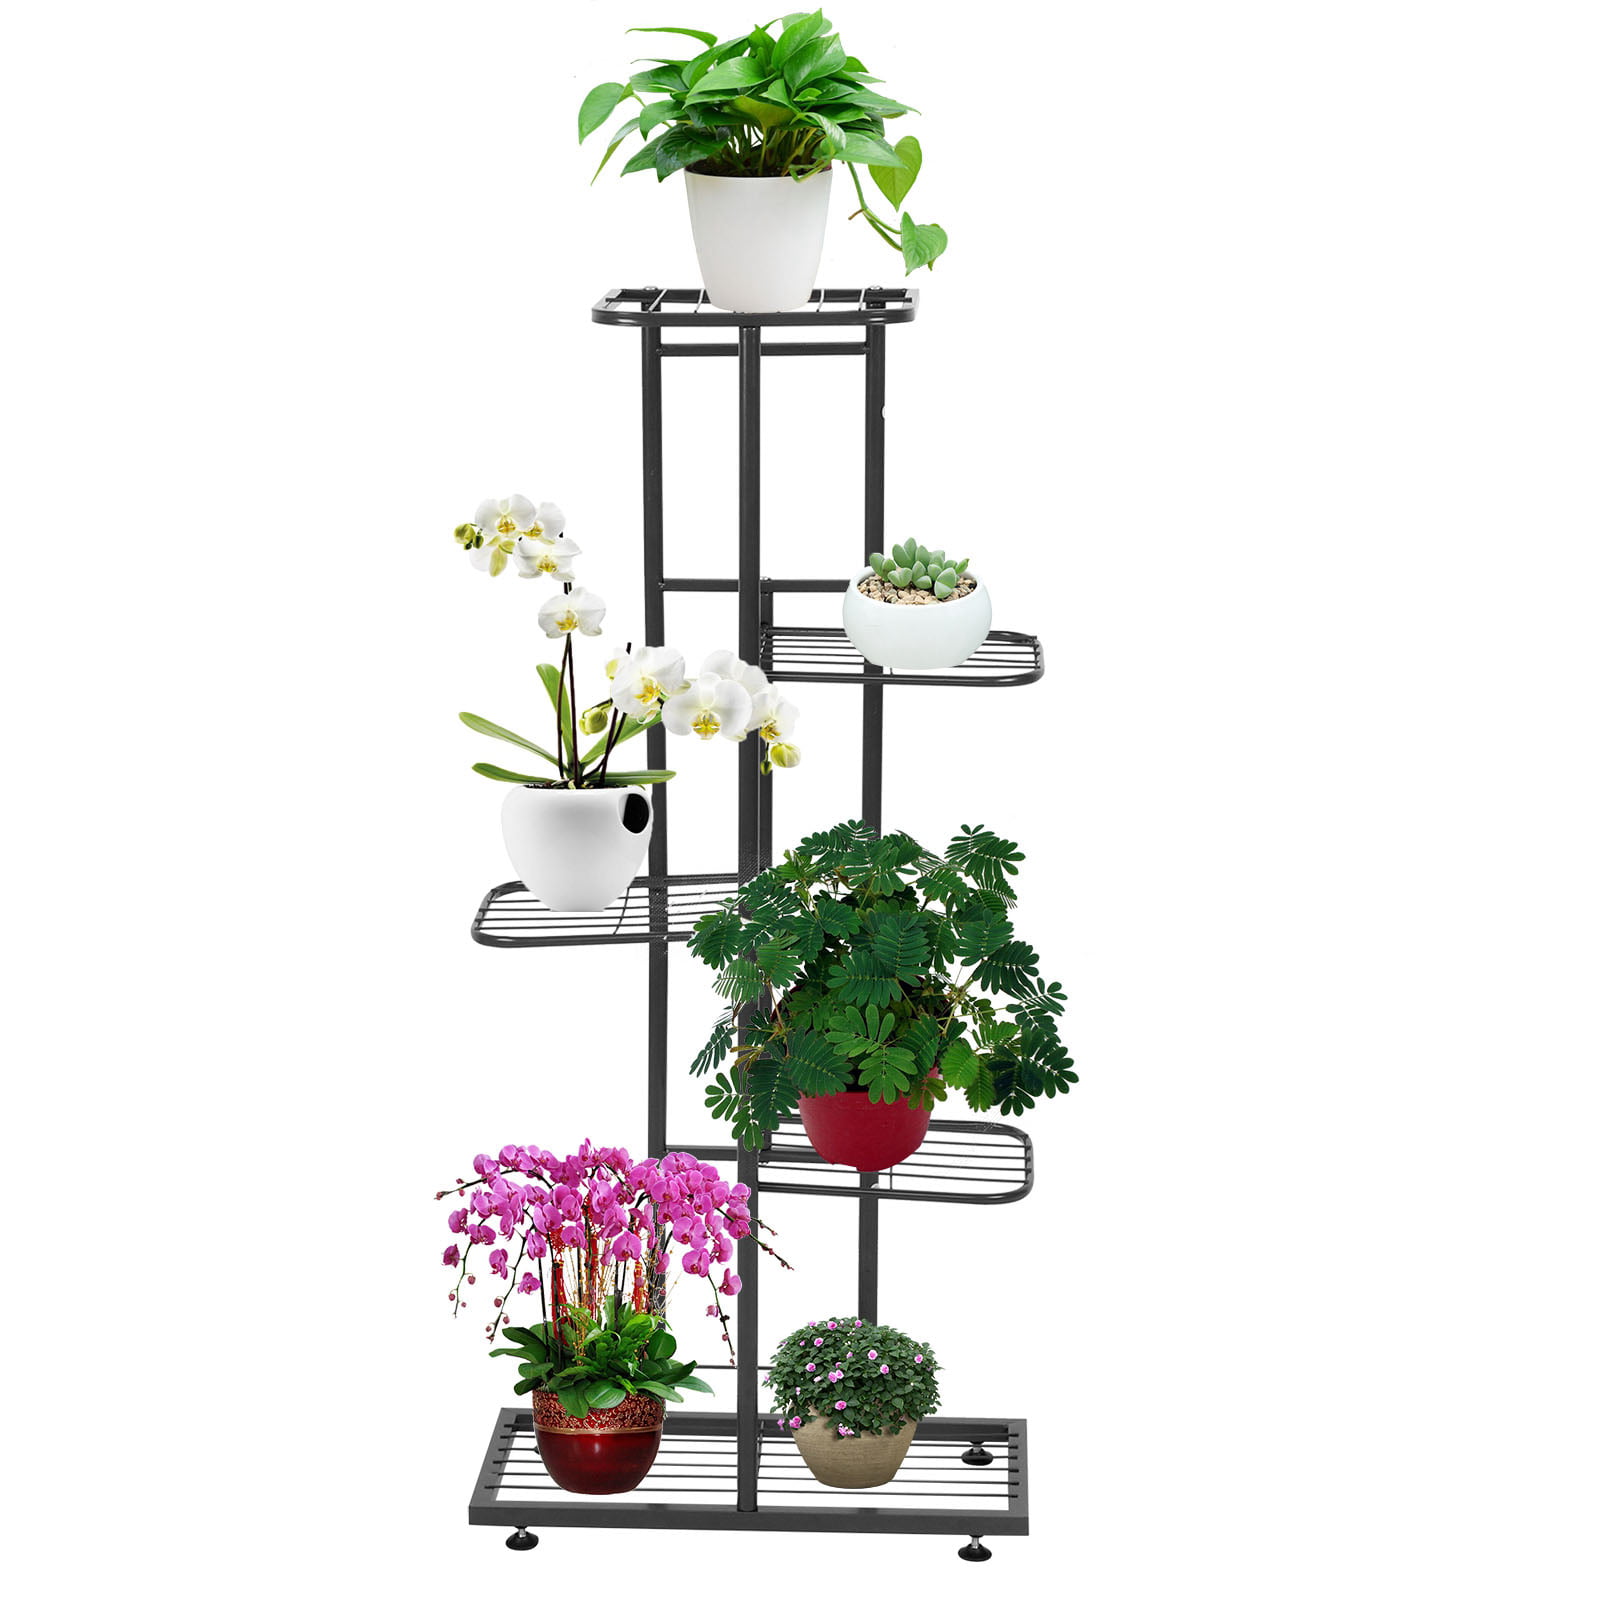 Details about   Metal Plant Pot Stand Indoor Garden Decor Flower Planter Display Holder Shelf 